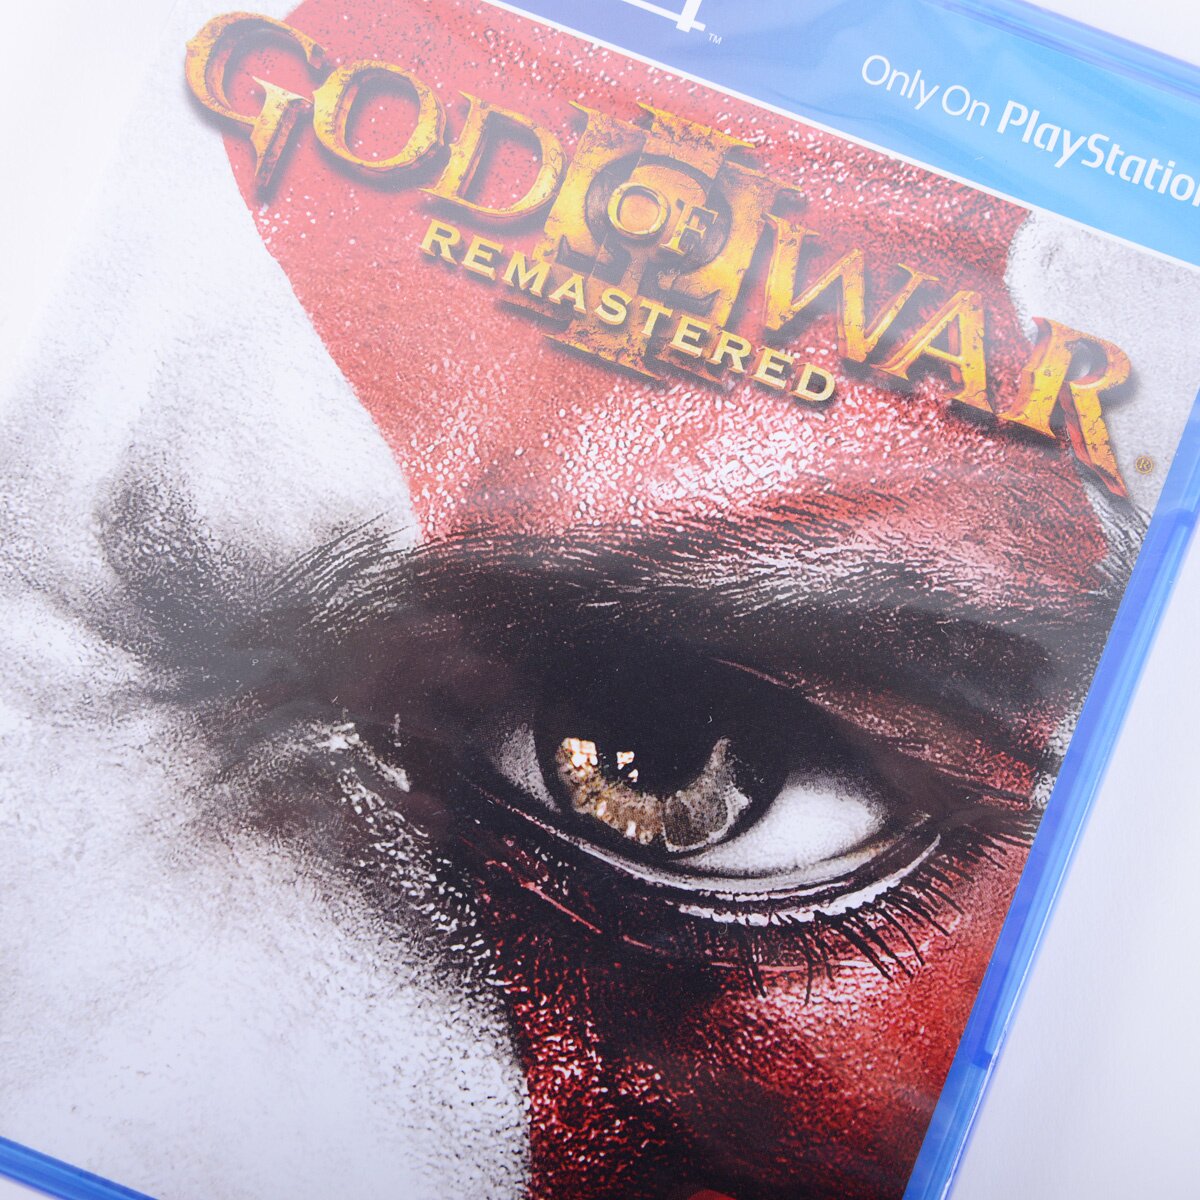 God of War 3 Remastered - PS4